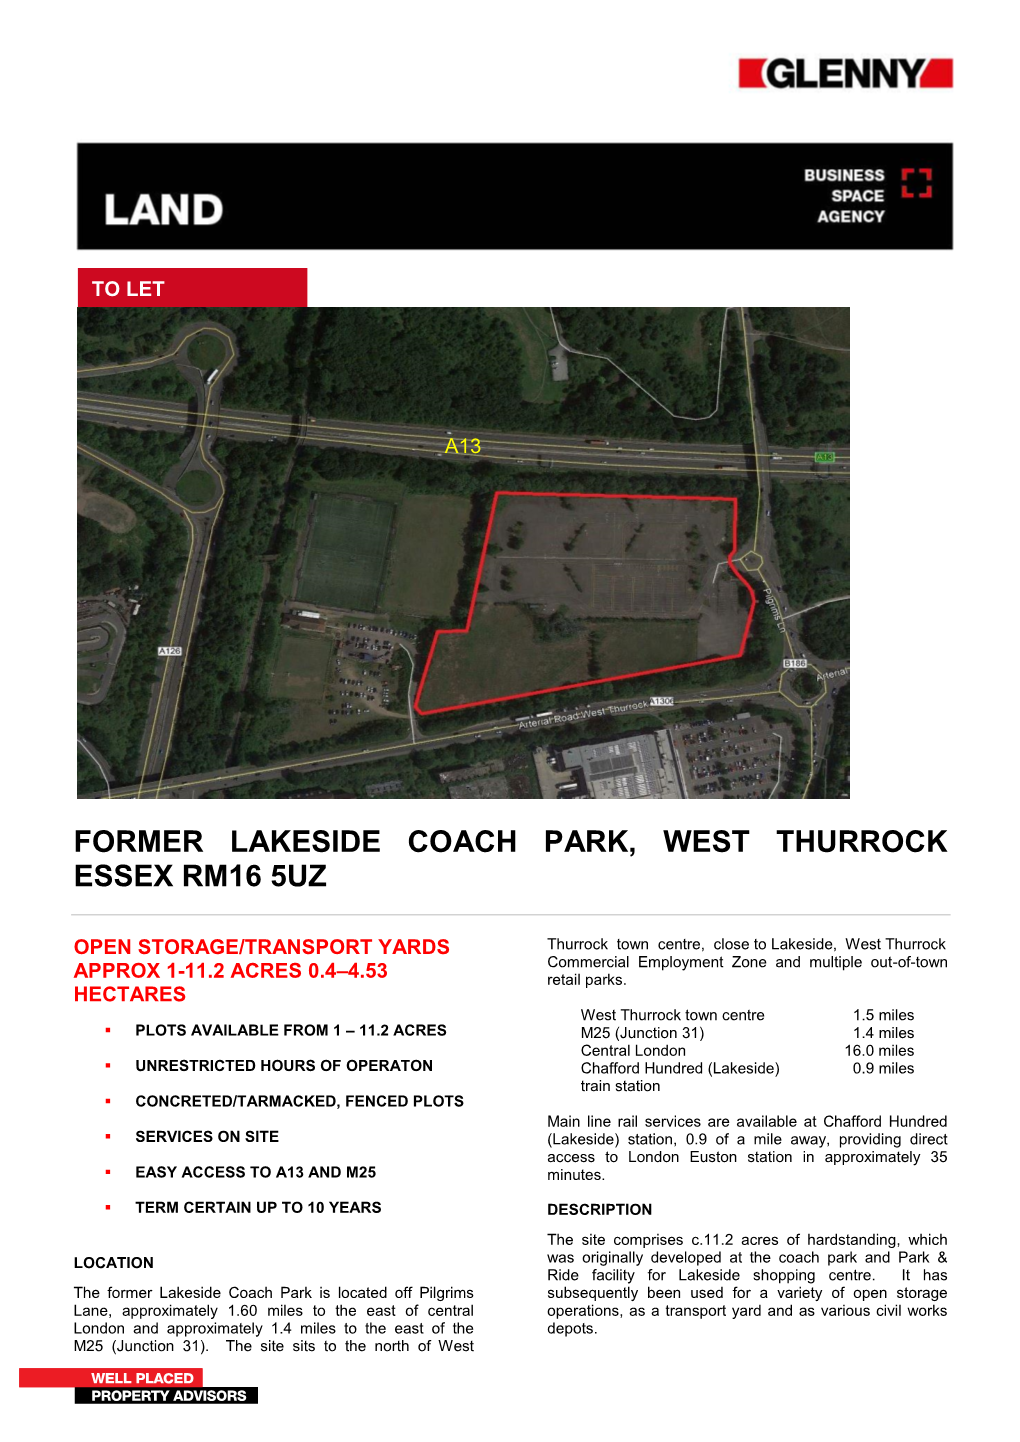 Former Lakeside Coach Park, West Thurrock Essex Rm16 5Uz